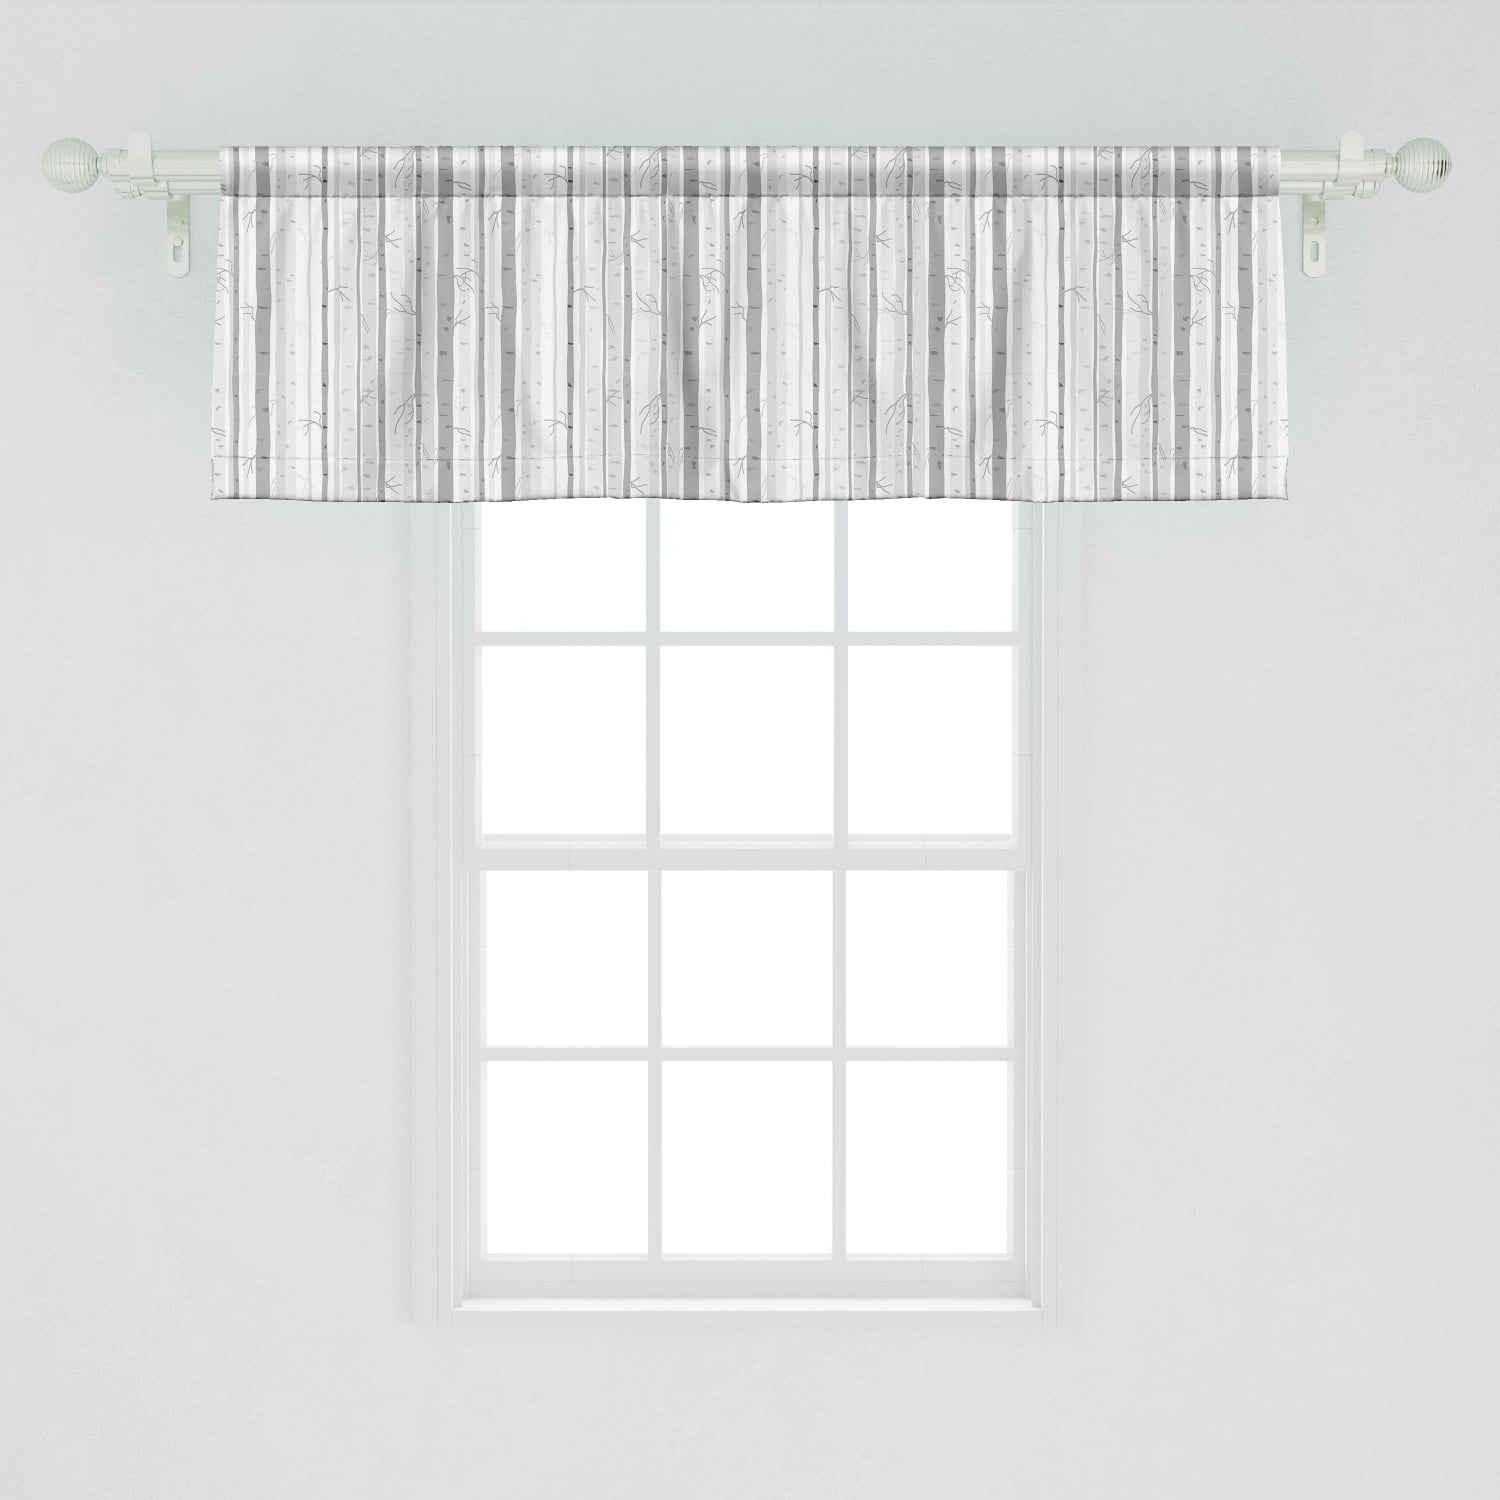 Tree Print Semi-Sheer Valance Curtain for Windows 15 inch Length Branch Design Kitchen Valance for Bathroom 50 W 1 Panel 